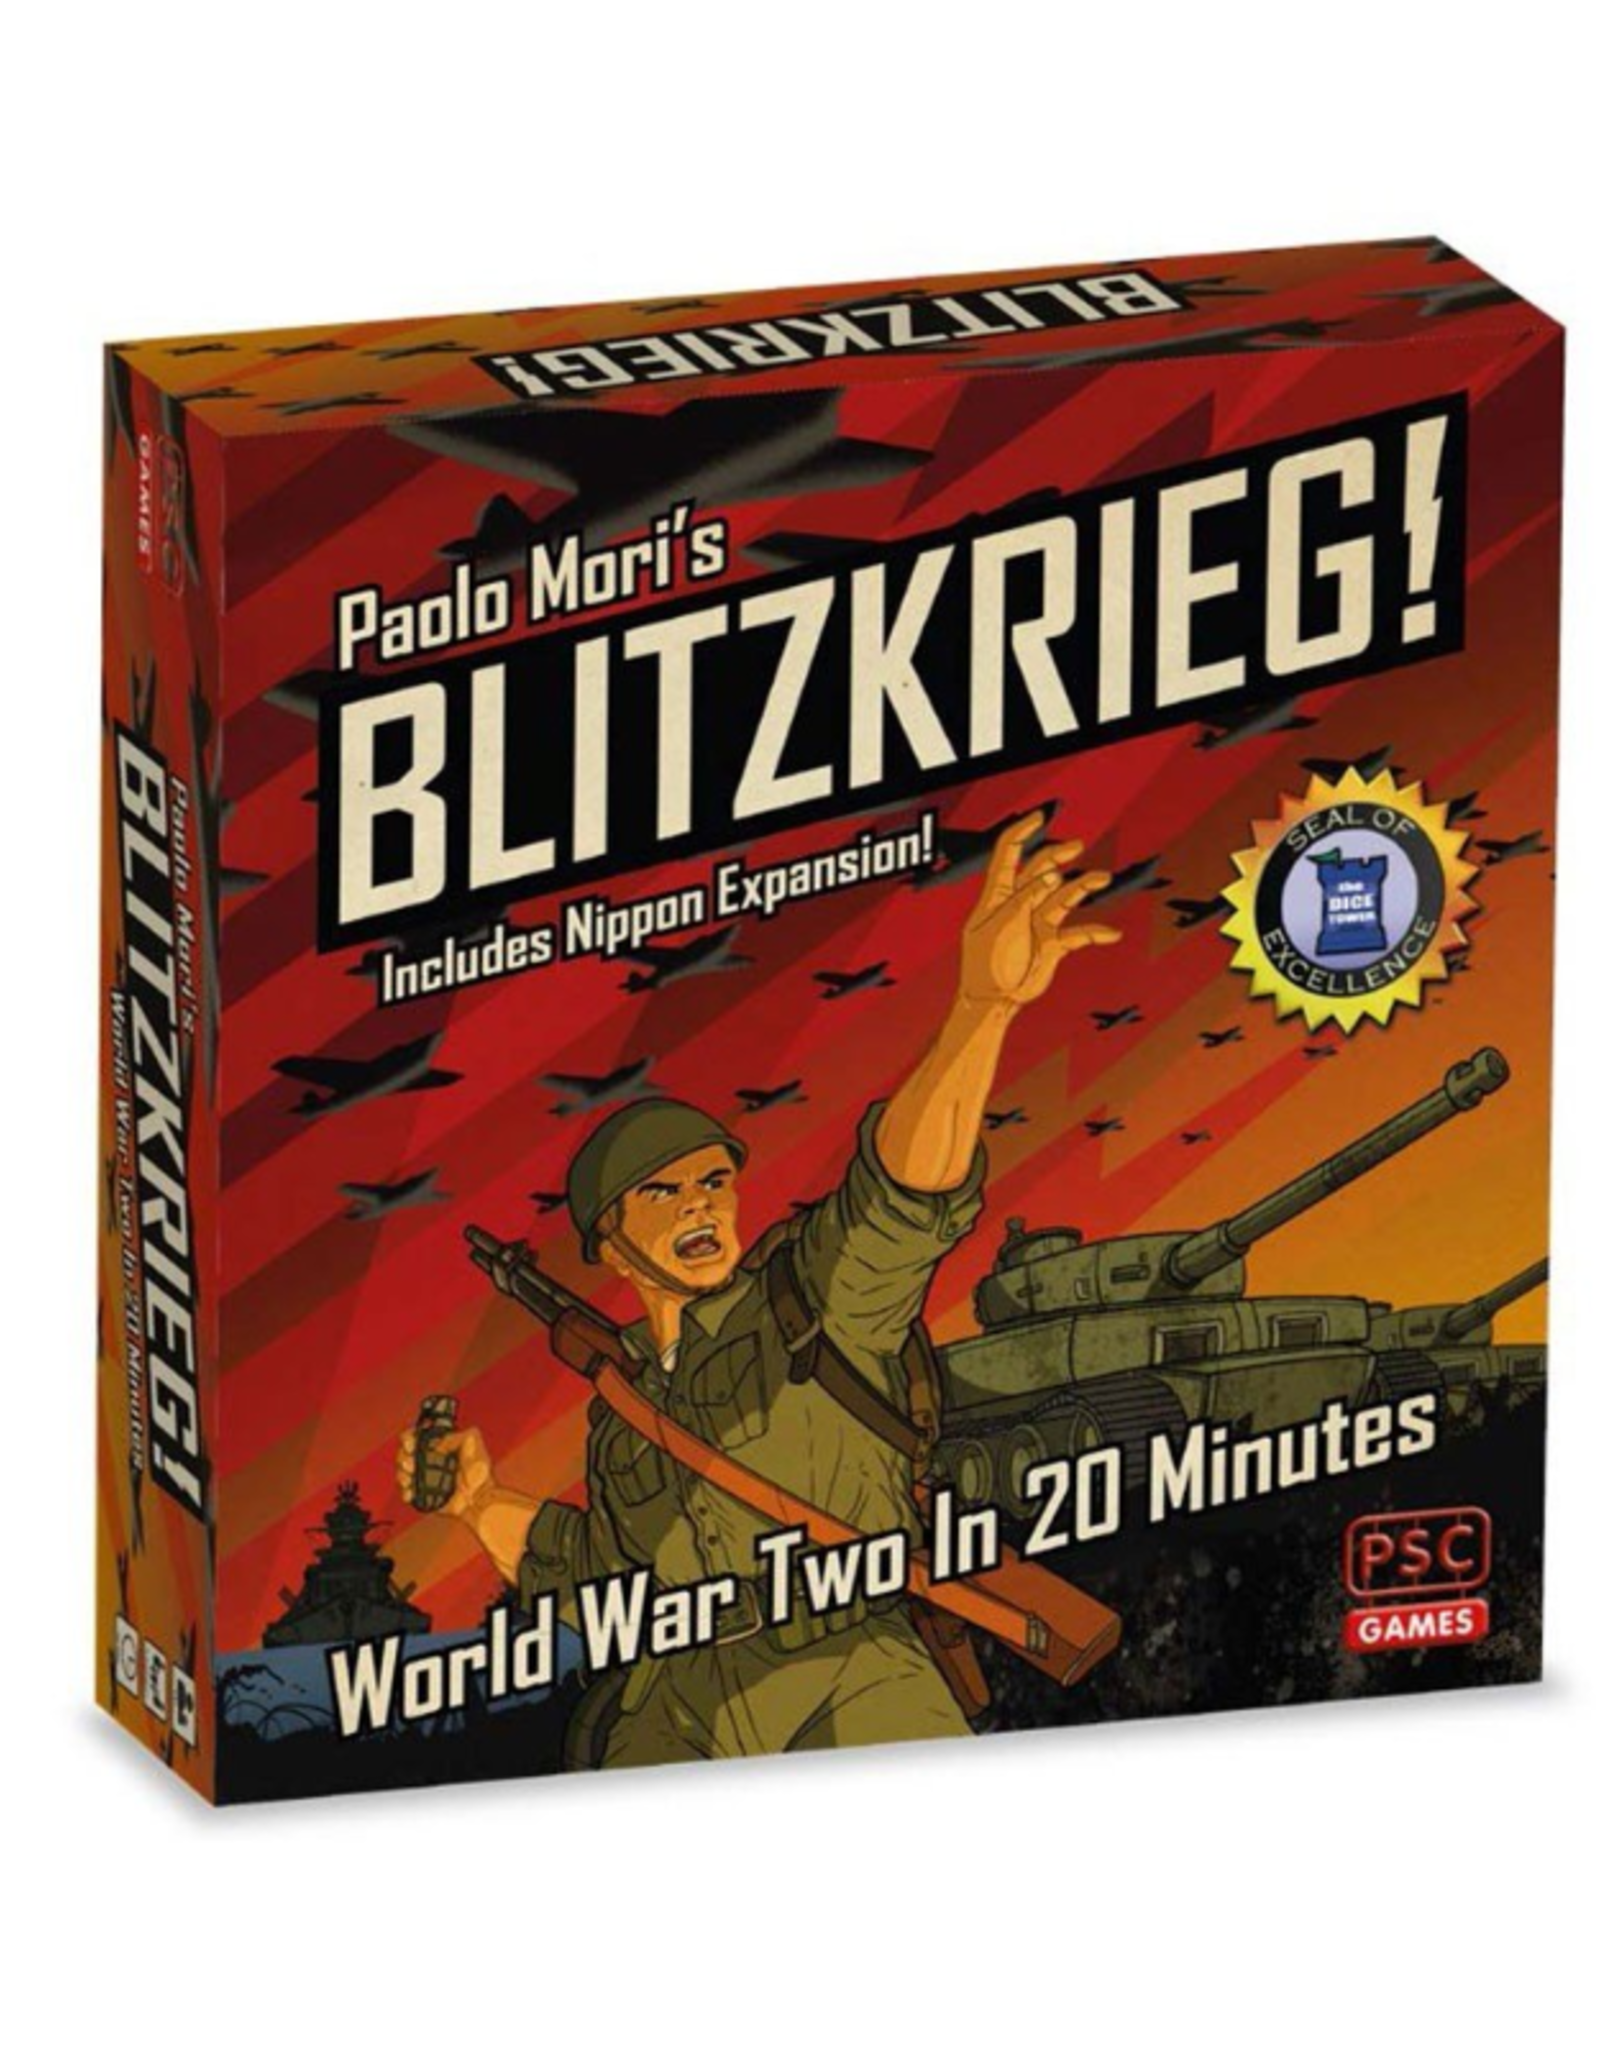 PSC Games Blitzkrieg (Square Box Ed.)